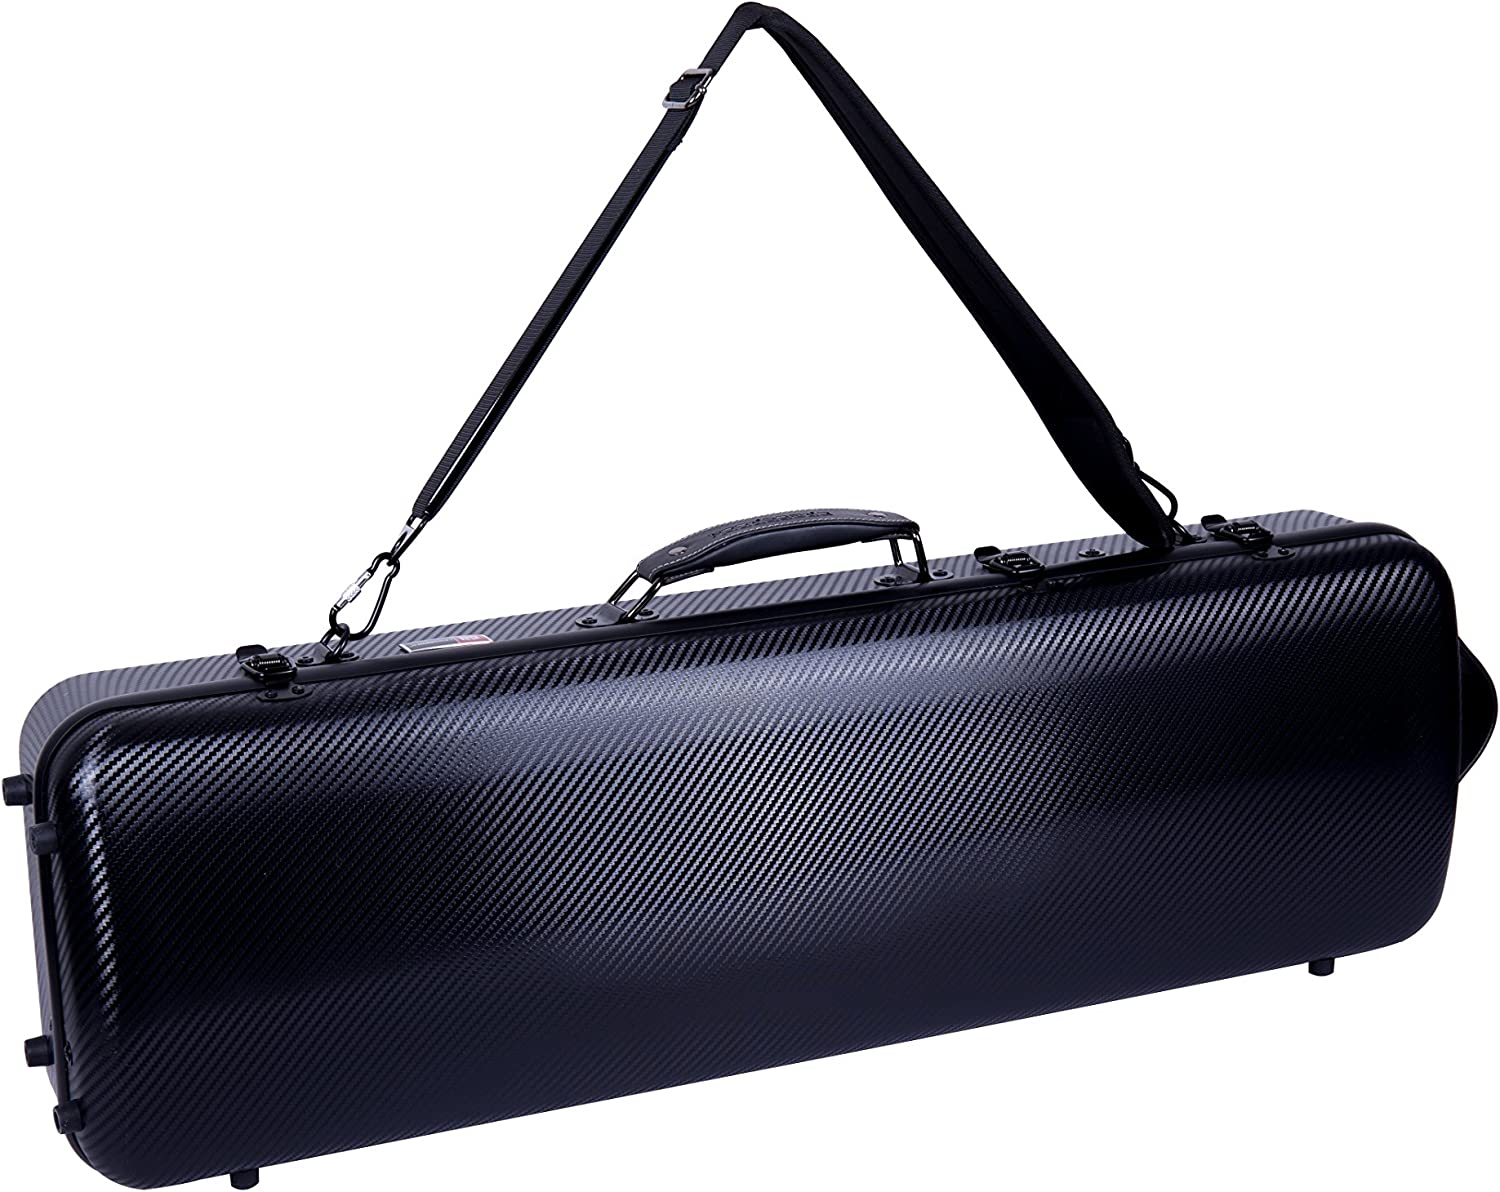 carbon fiber violin case